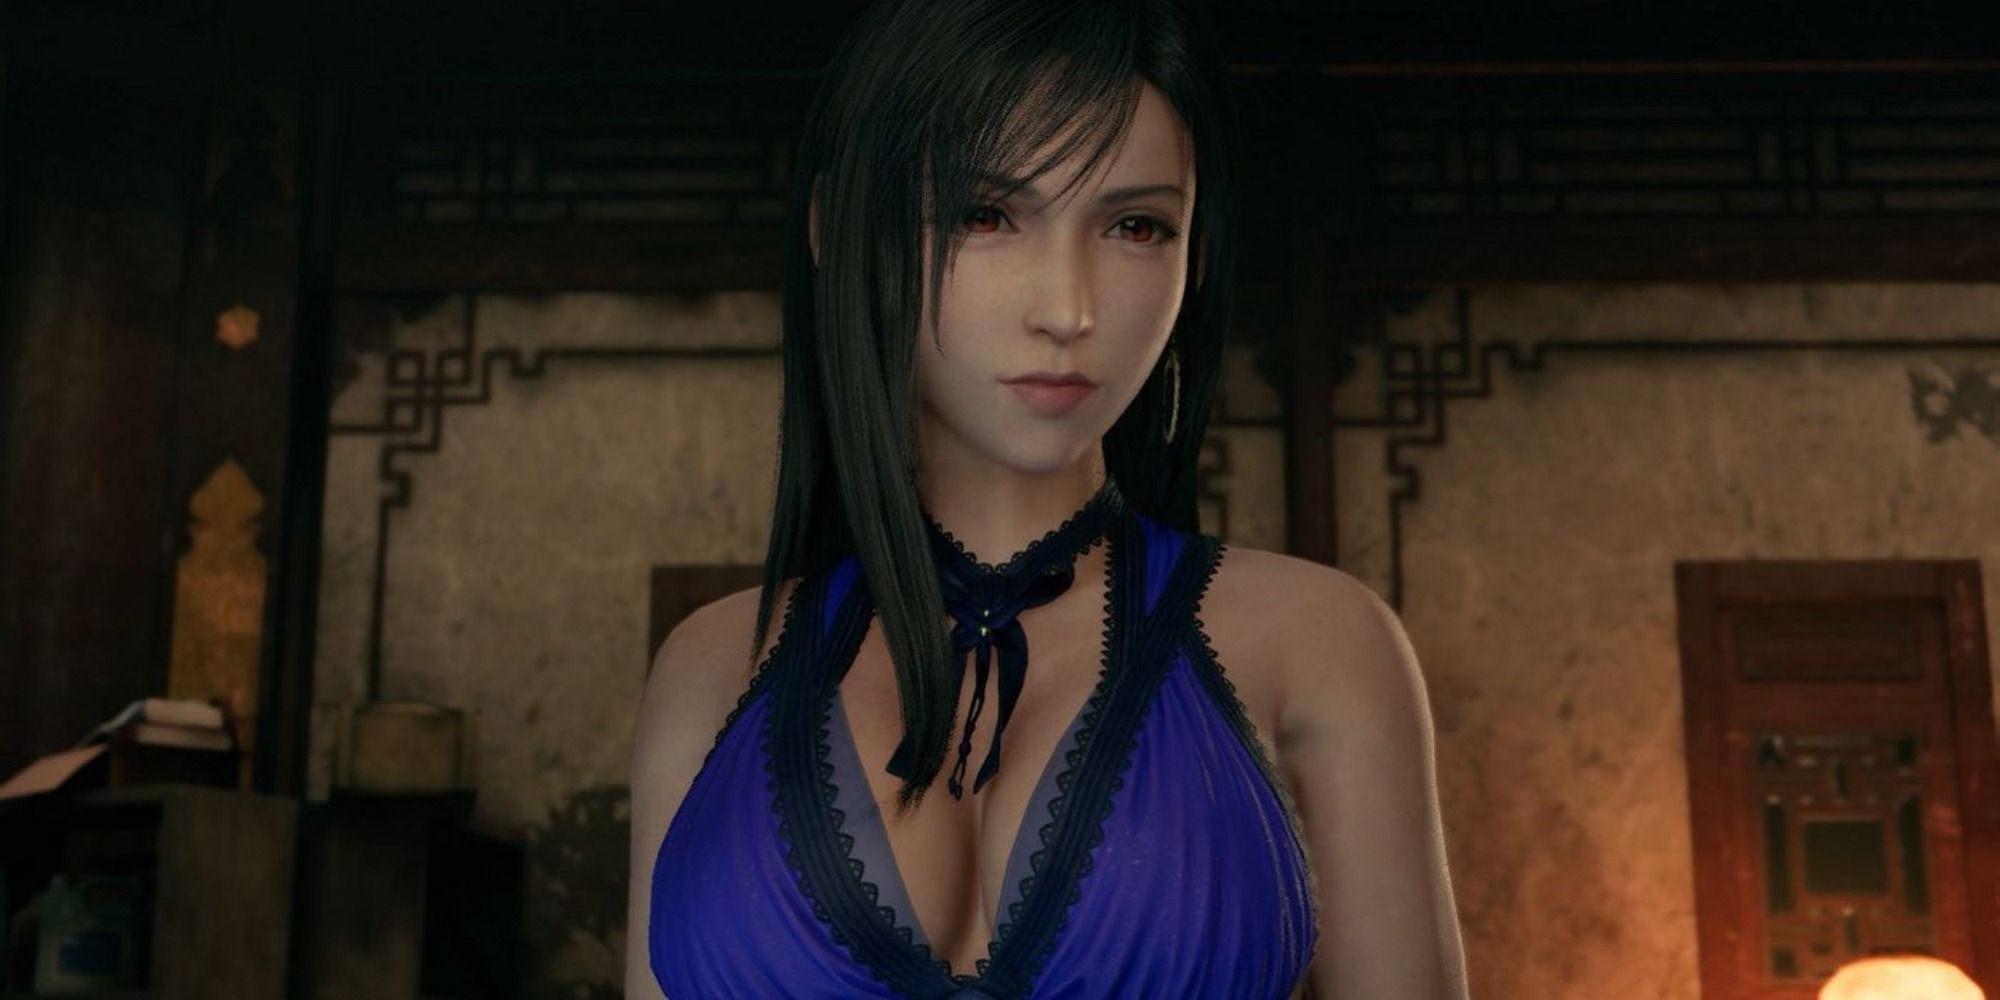 Final Fantasy 7 Remake Already Has A Ton Of Mods On PC